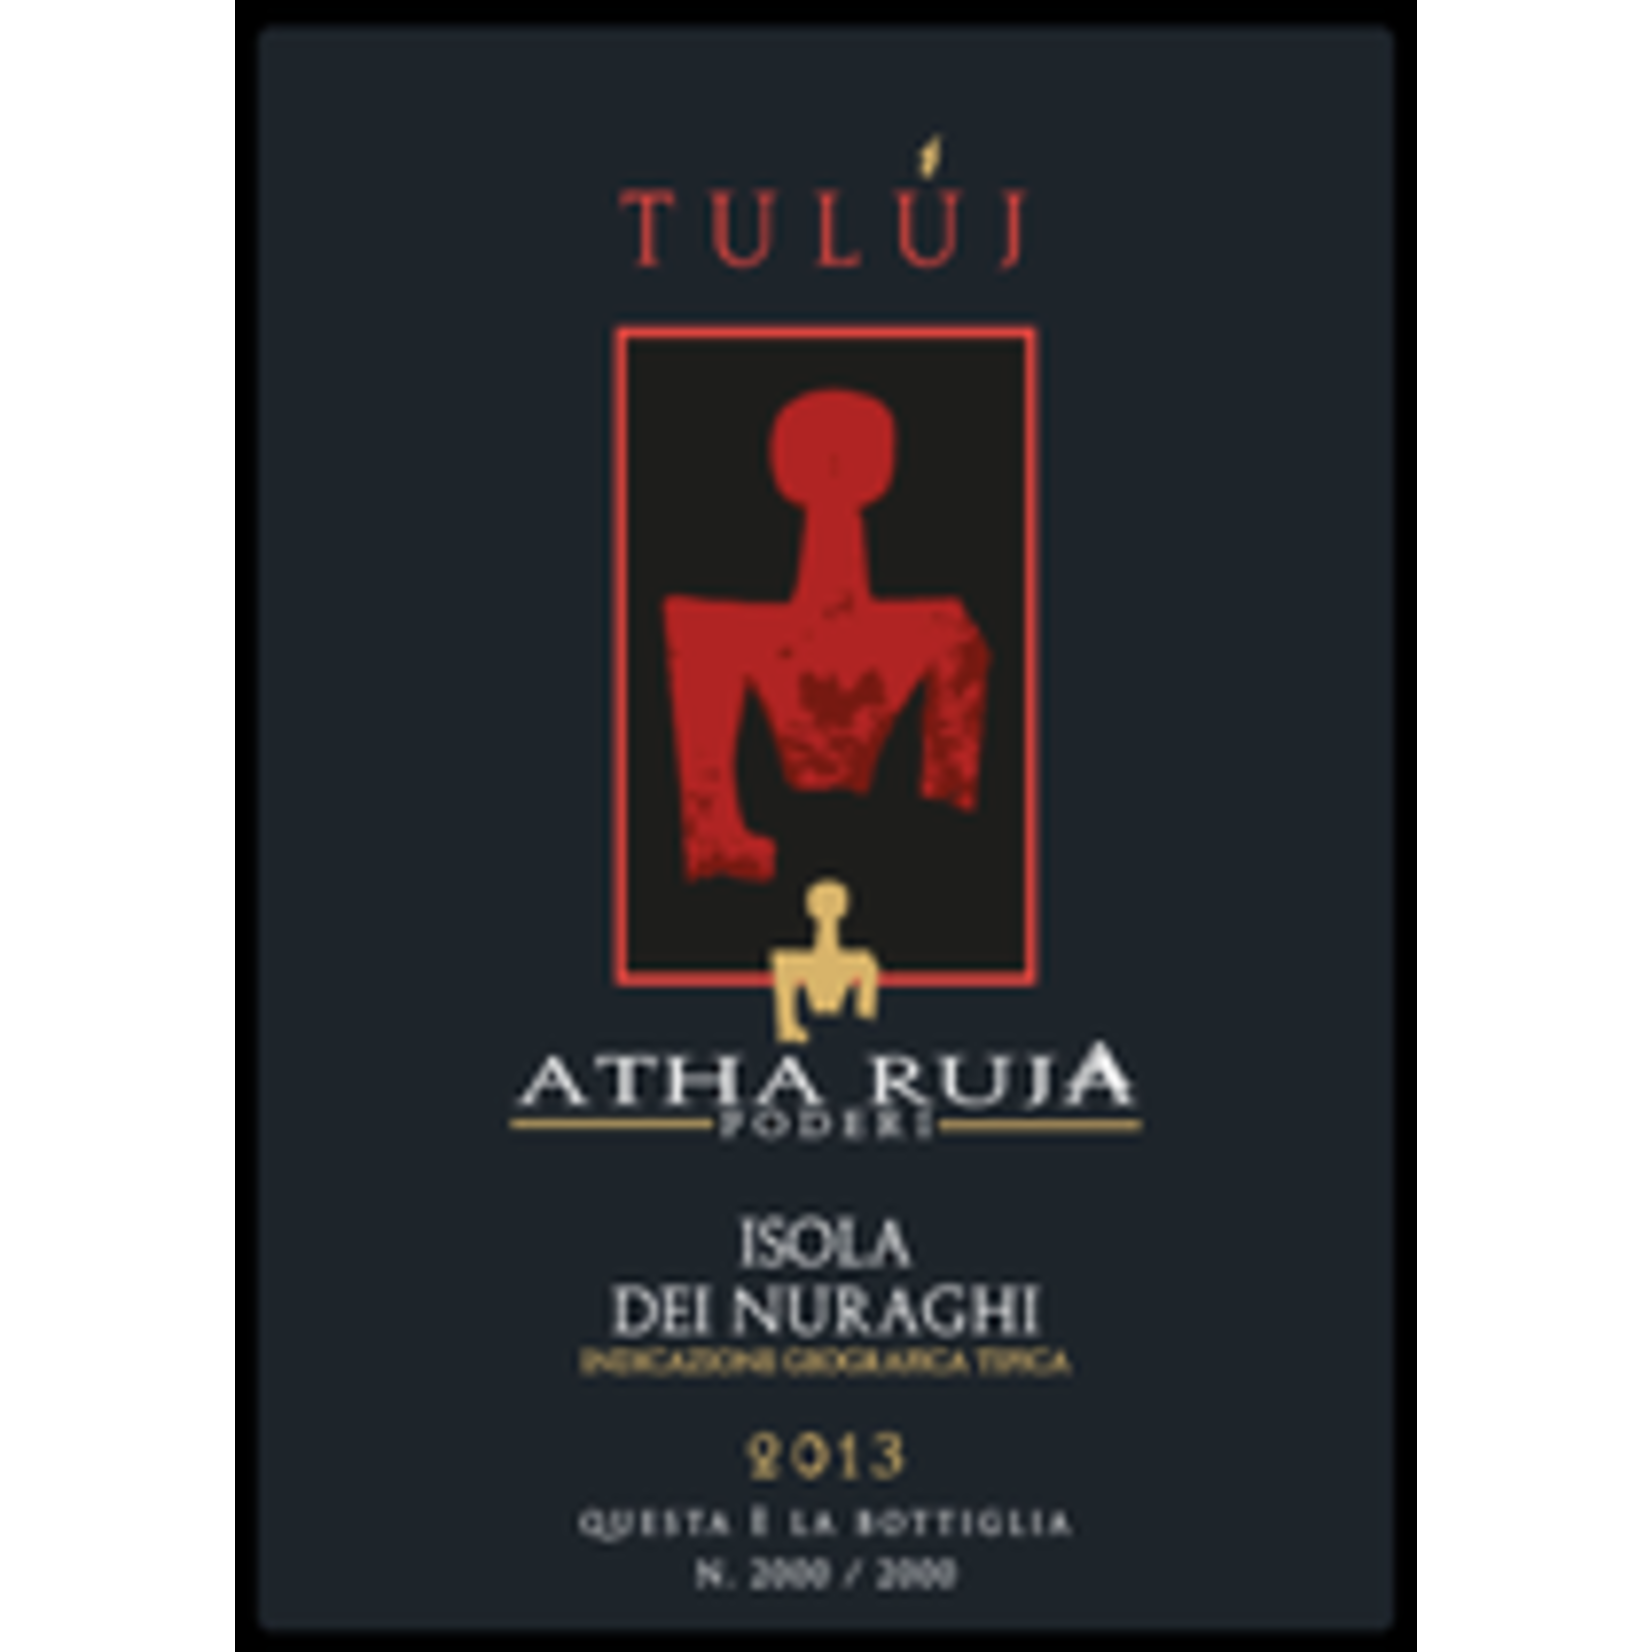 Wine Atha Ruja, Isola dei Nuraghi Tuluj 2013